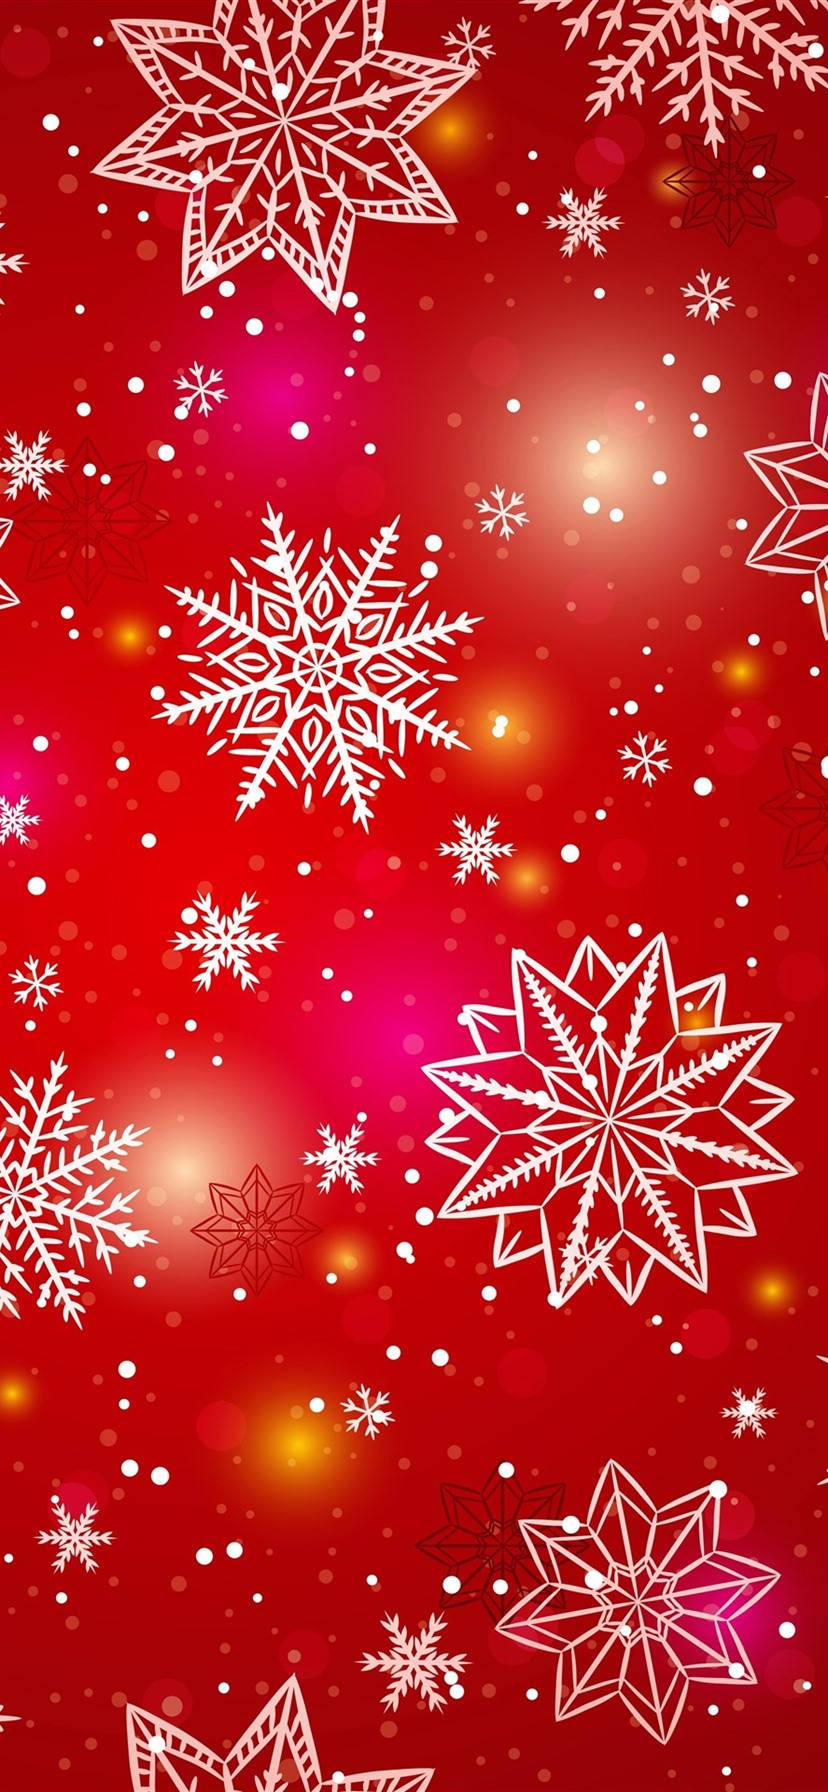 Snowflake Red Art Iphone Wallpaper